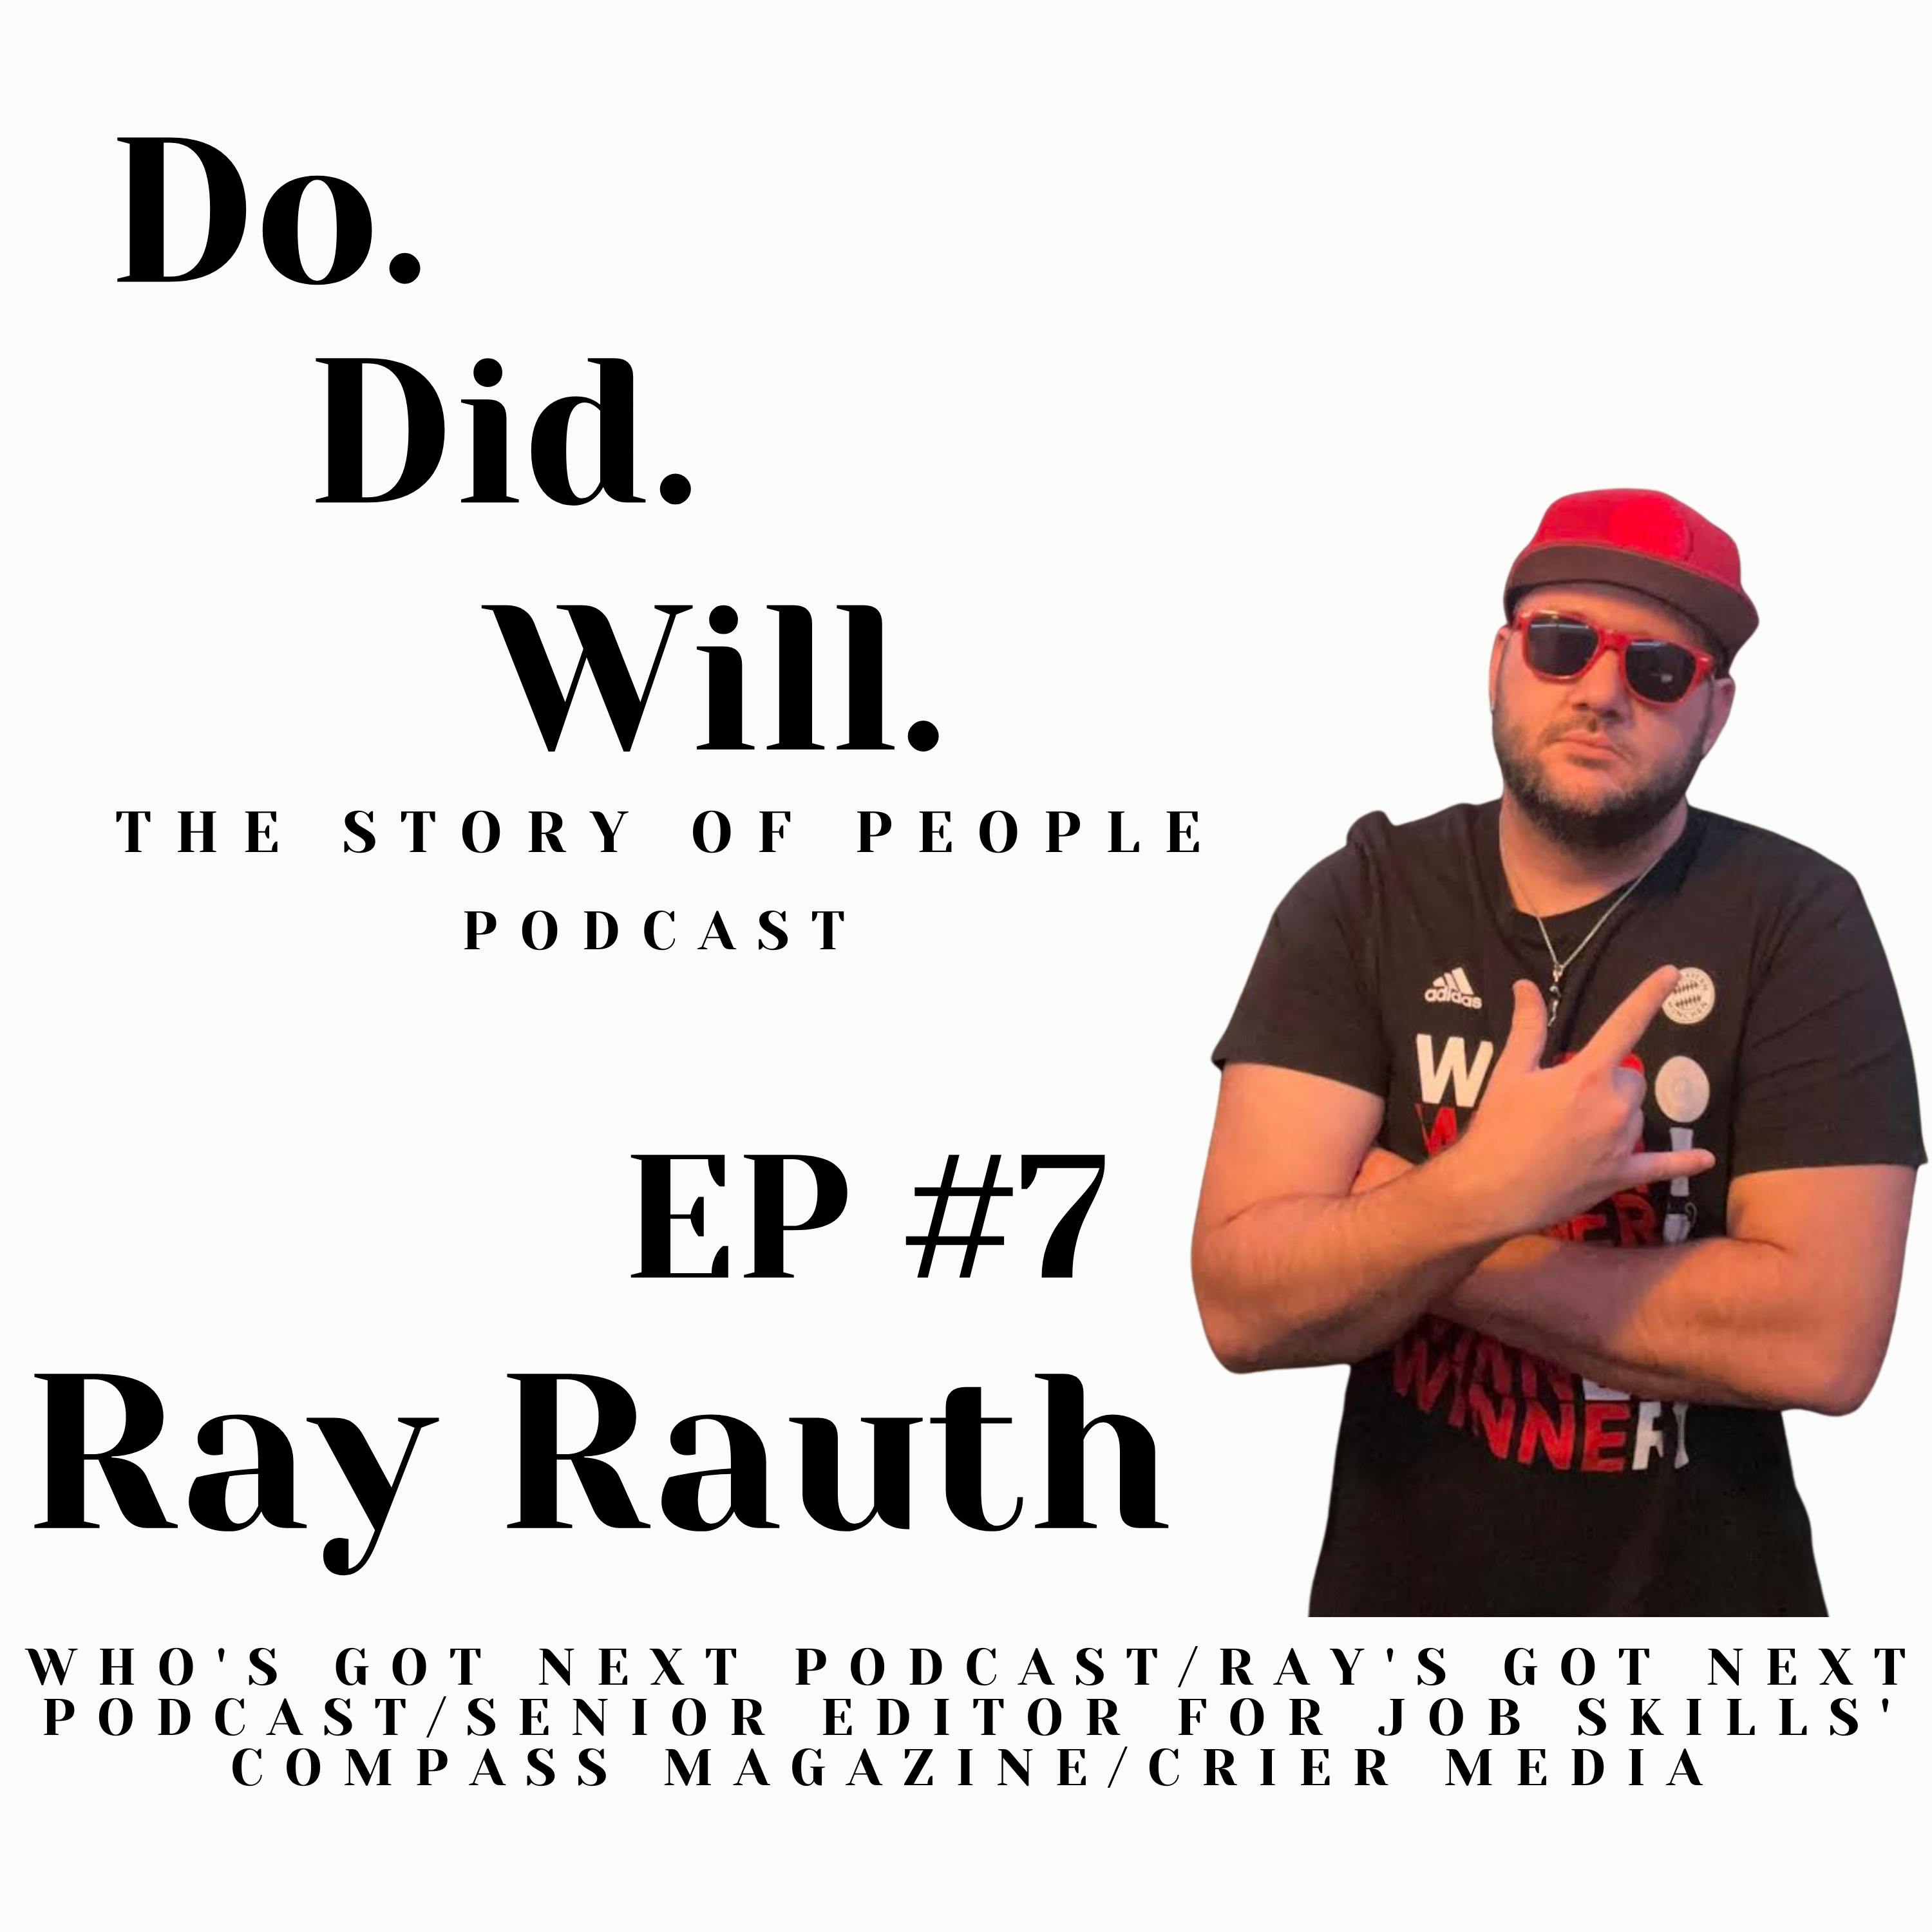 Ray Rauth (Who's Got Next/Ray's Got Next Podcast, JobSkills.Org/Compass Magazine, Crier Media)